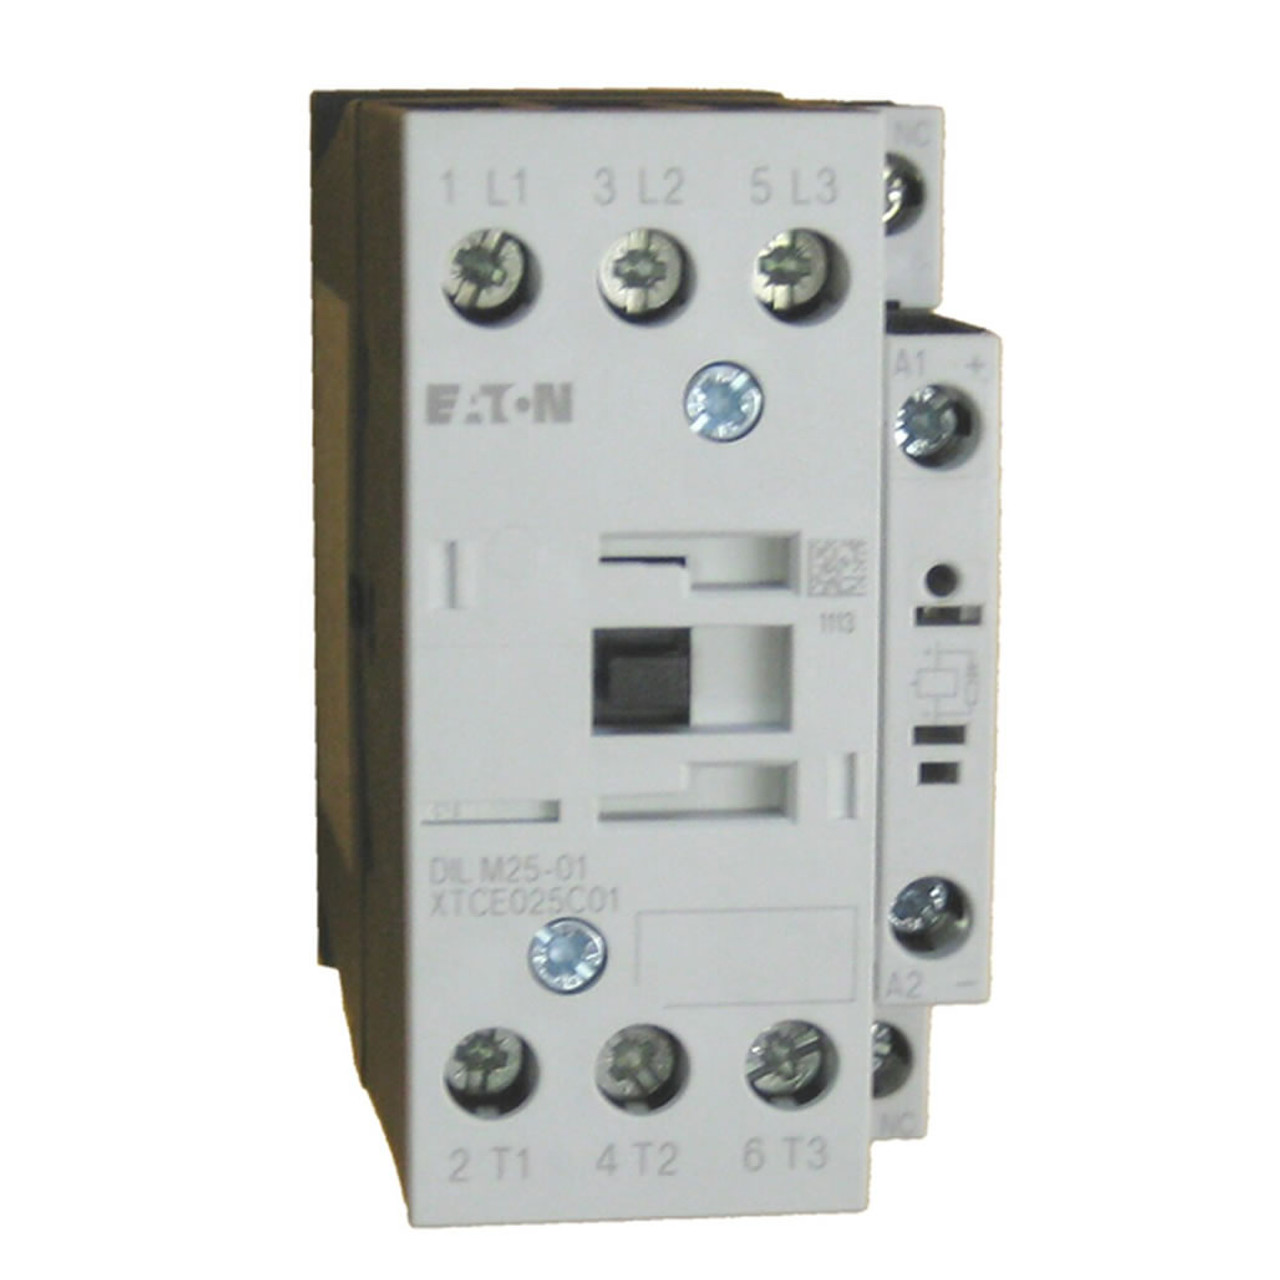 Eaton XTCE025C01L contactor